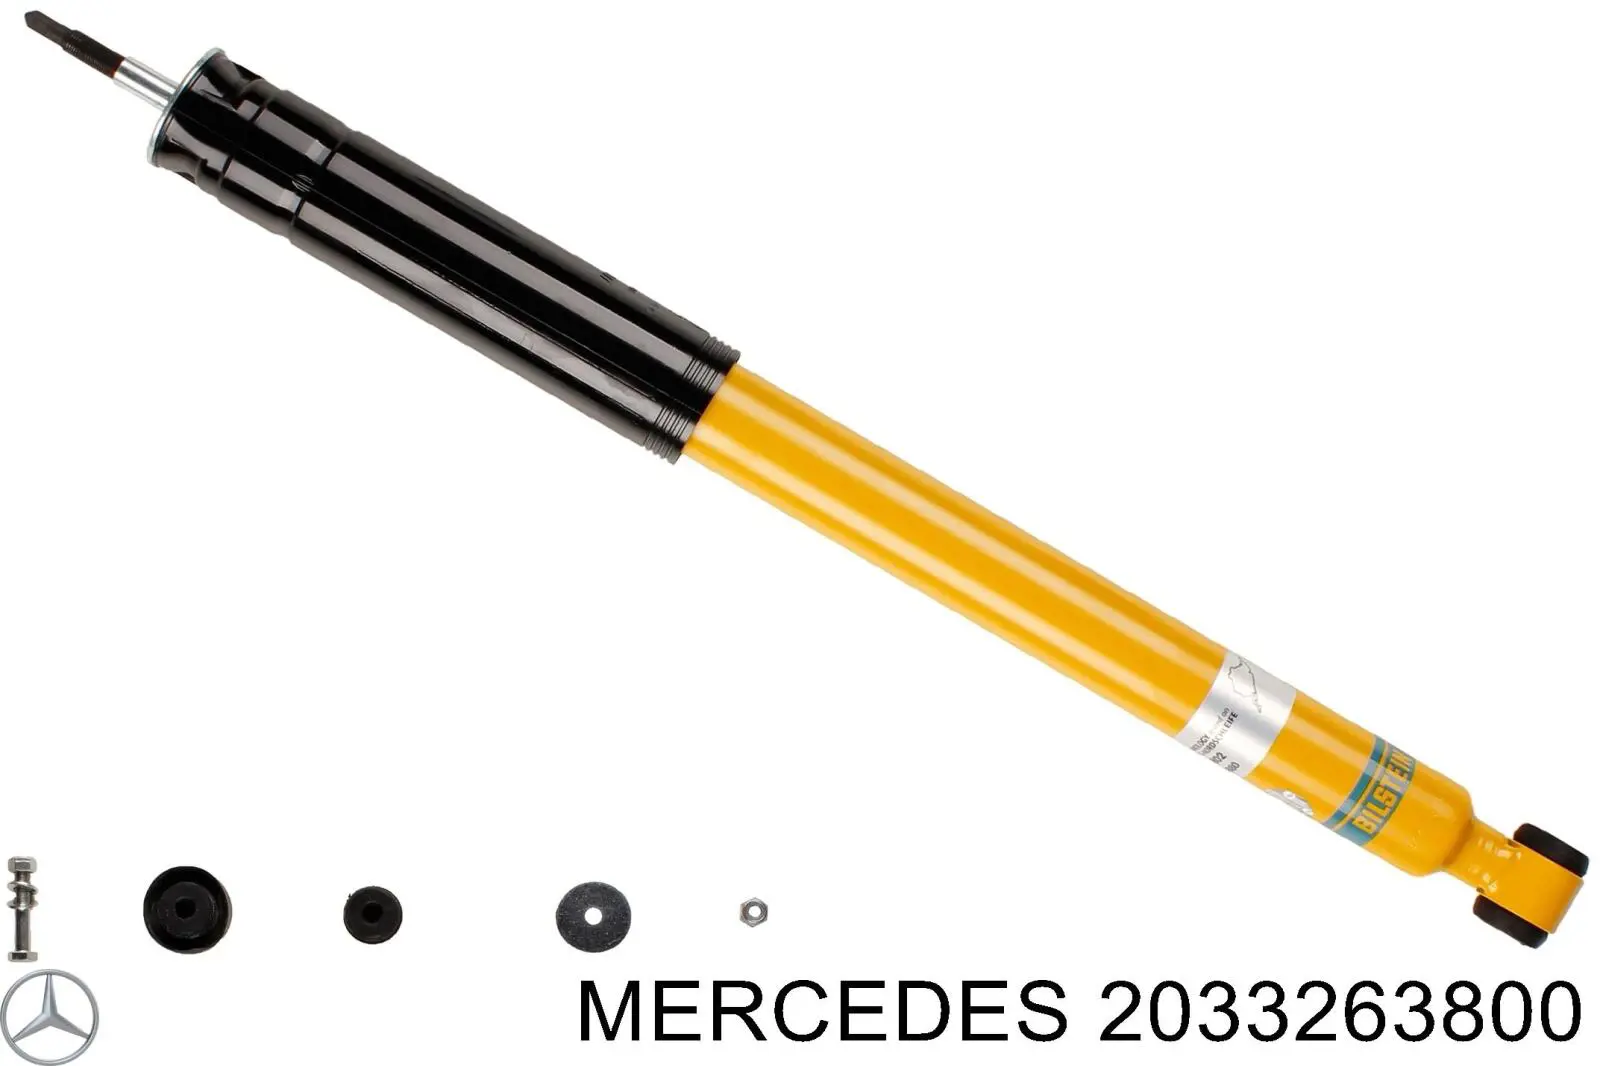 2033263800 Mercedes 